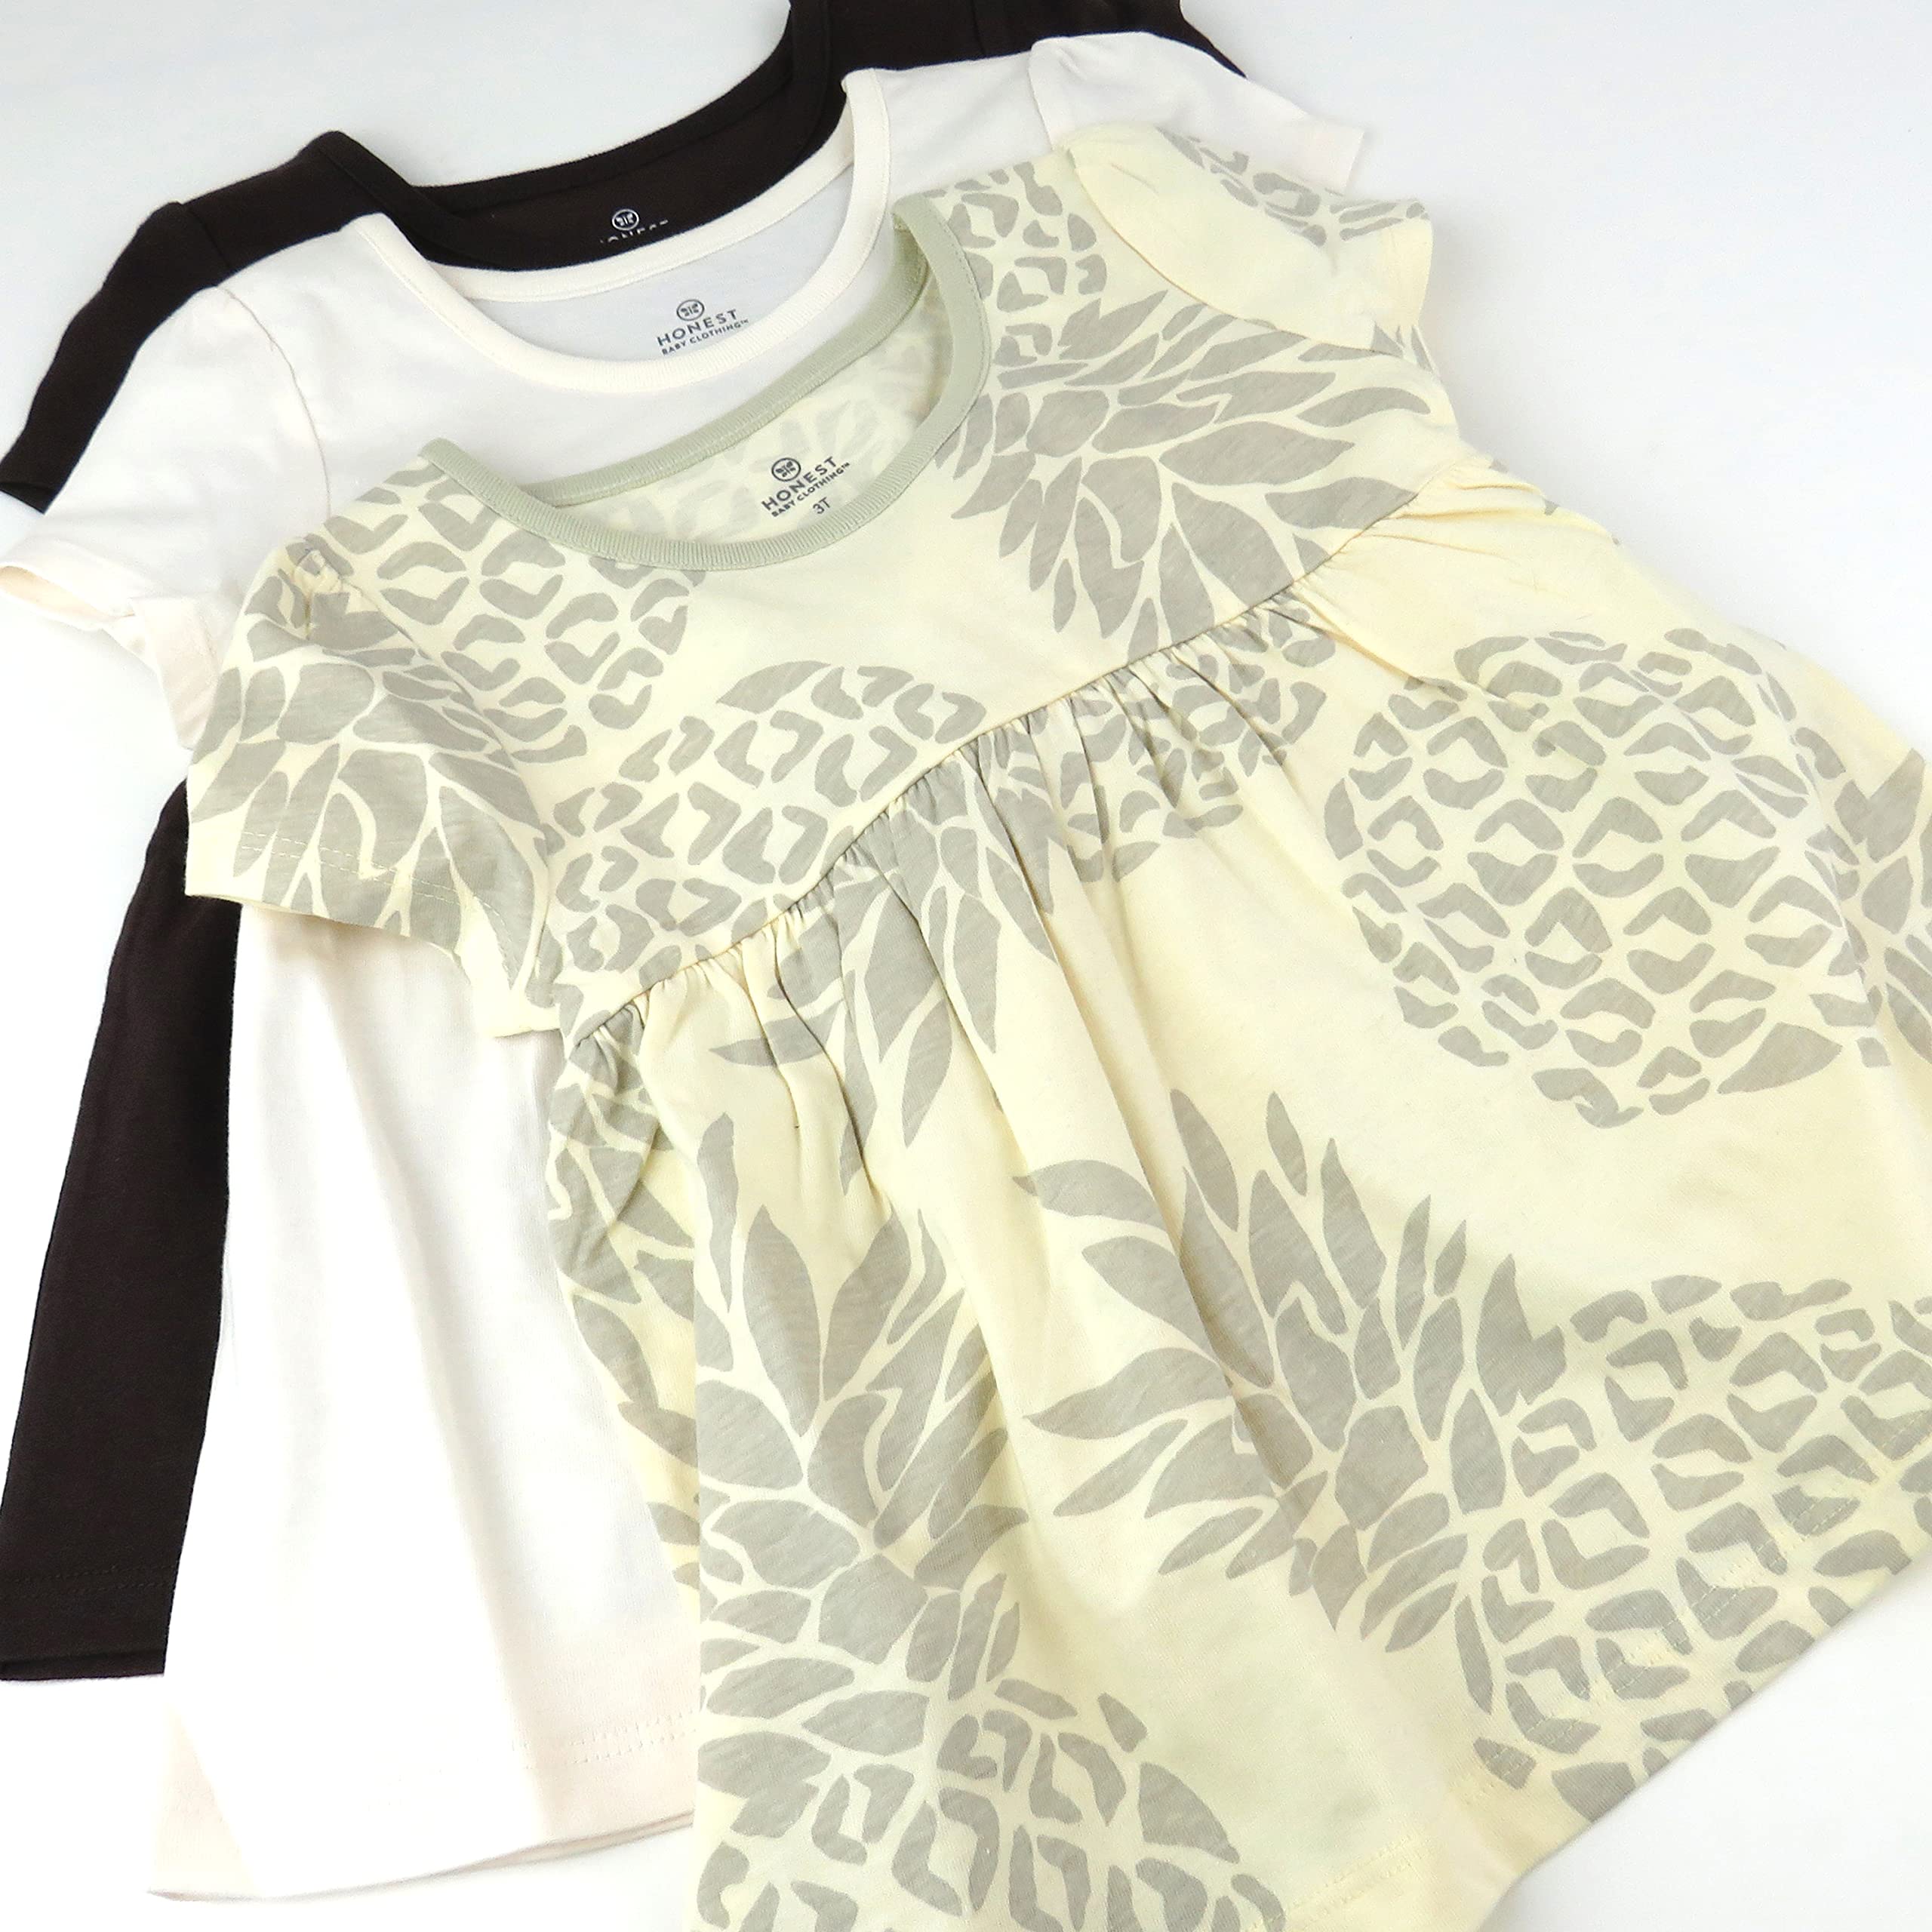 HonestBaby Multipack Short Sleeve T-Shirt Tee 100% Organic Cotton Infant Baby, Toddler,Little Kids Boys, Girls,Unisex(Legacy)